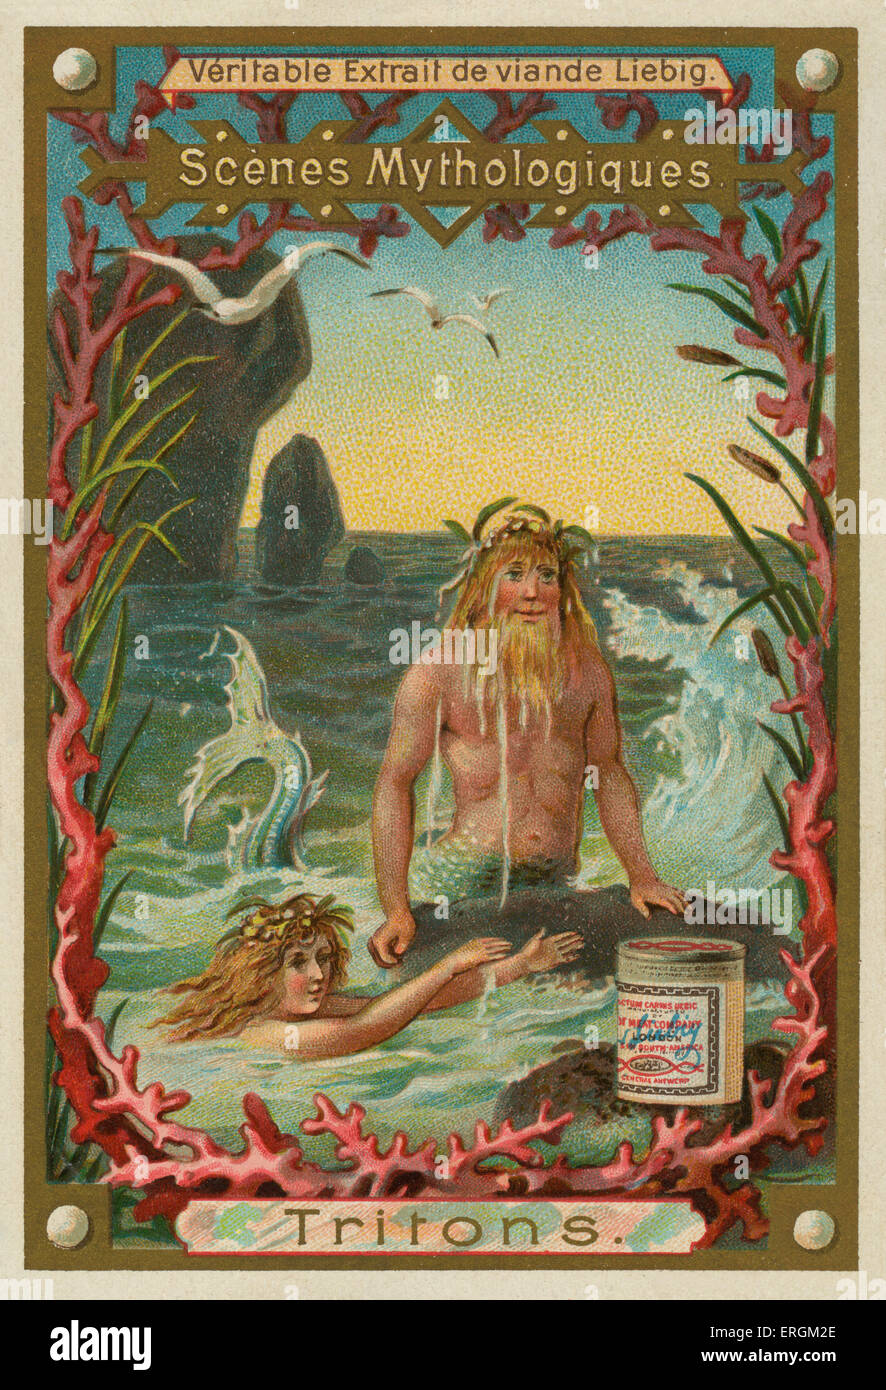 Triton- mythological Greek god and the messenger of the sea. Liebig card, Mythological Scenes (French:Scenes Mythologiques), Stock Photo